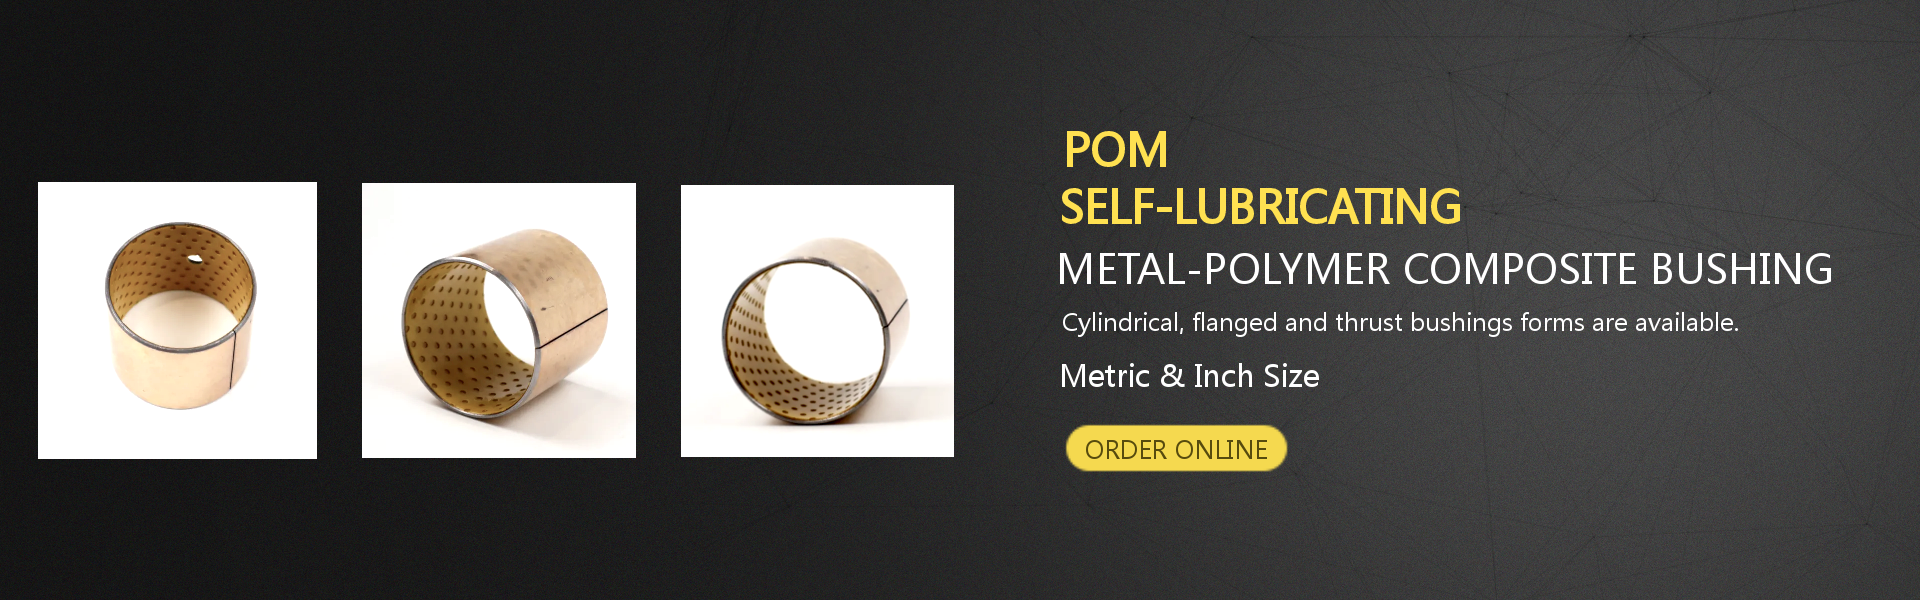 self-lubricating pom metal-polymer composite bushing